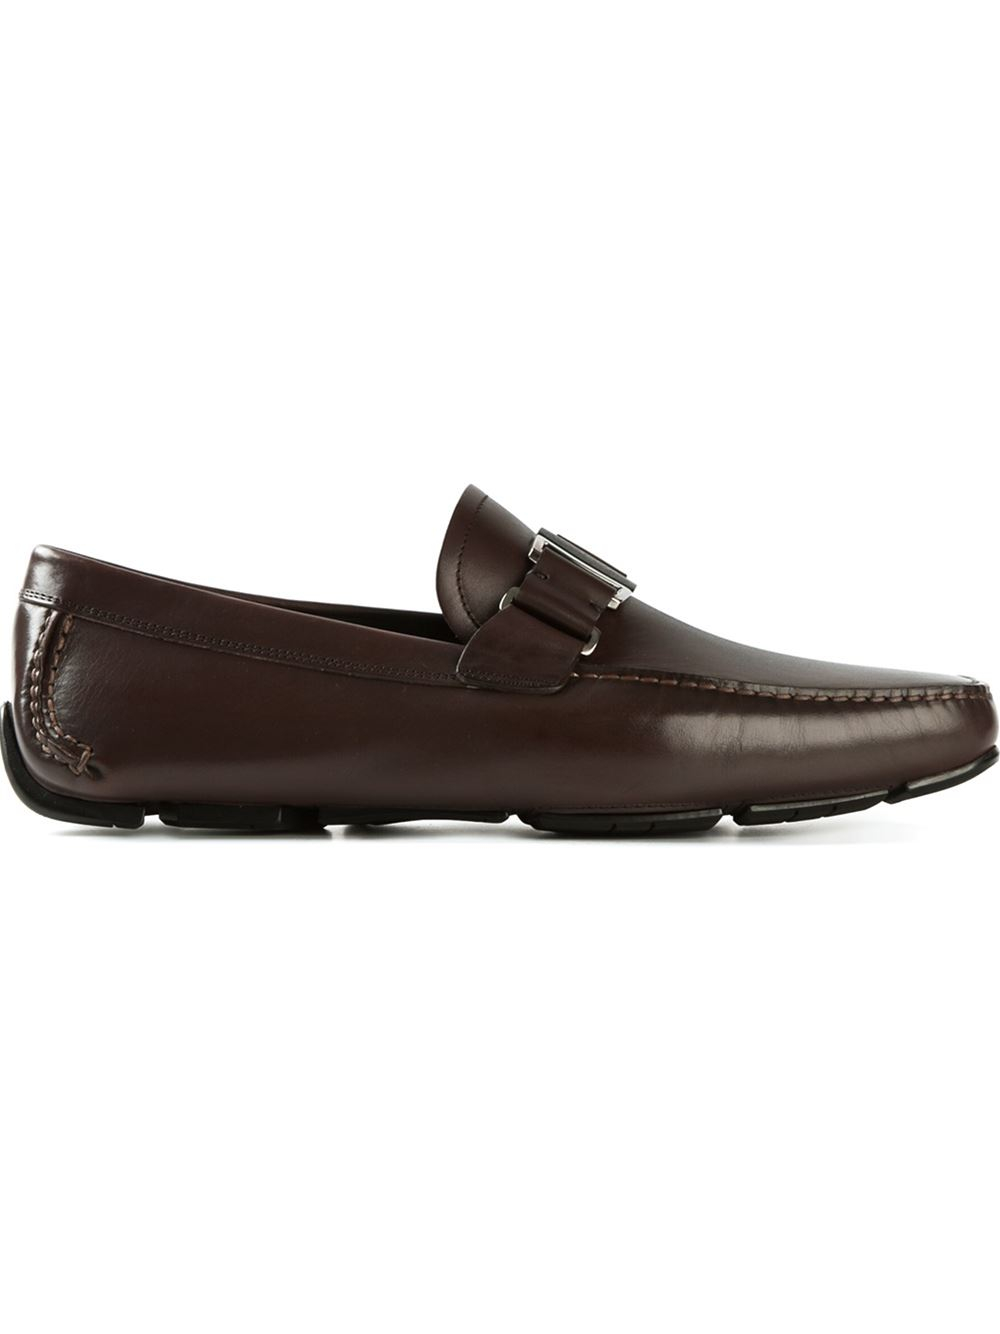 Ferragamo 'Sardegna' Driving Shoes in Brown for Men | Lyst